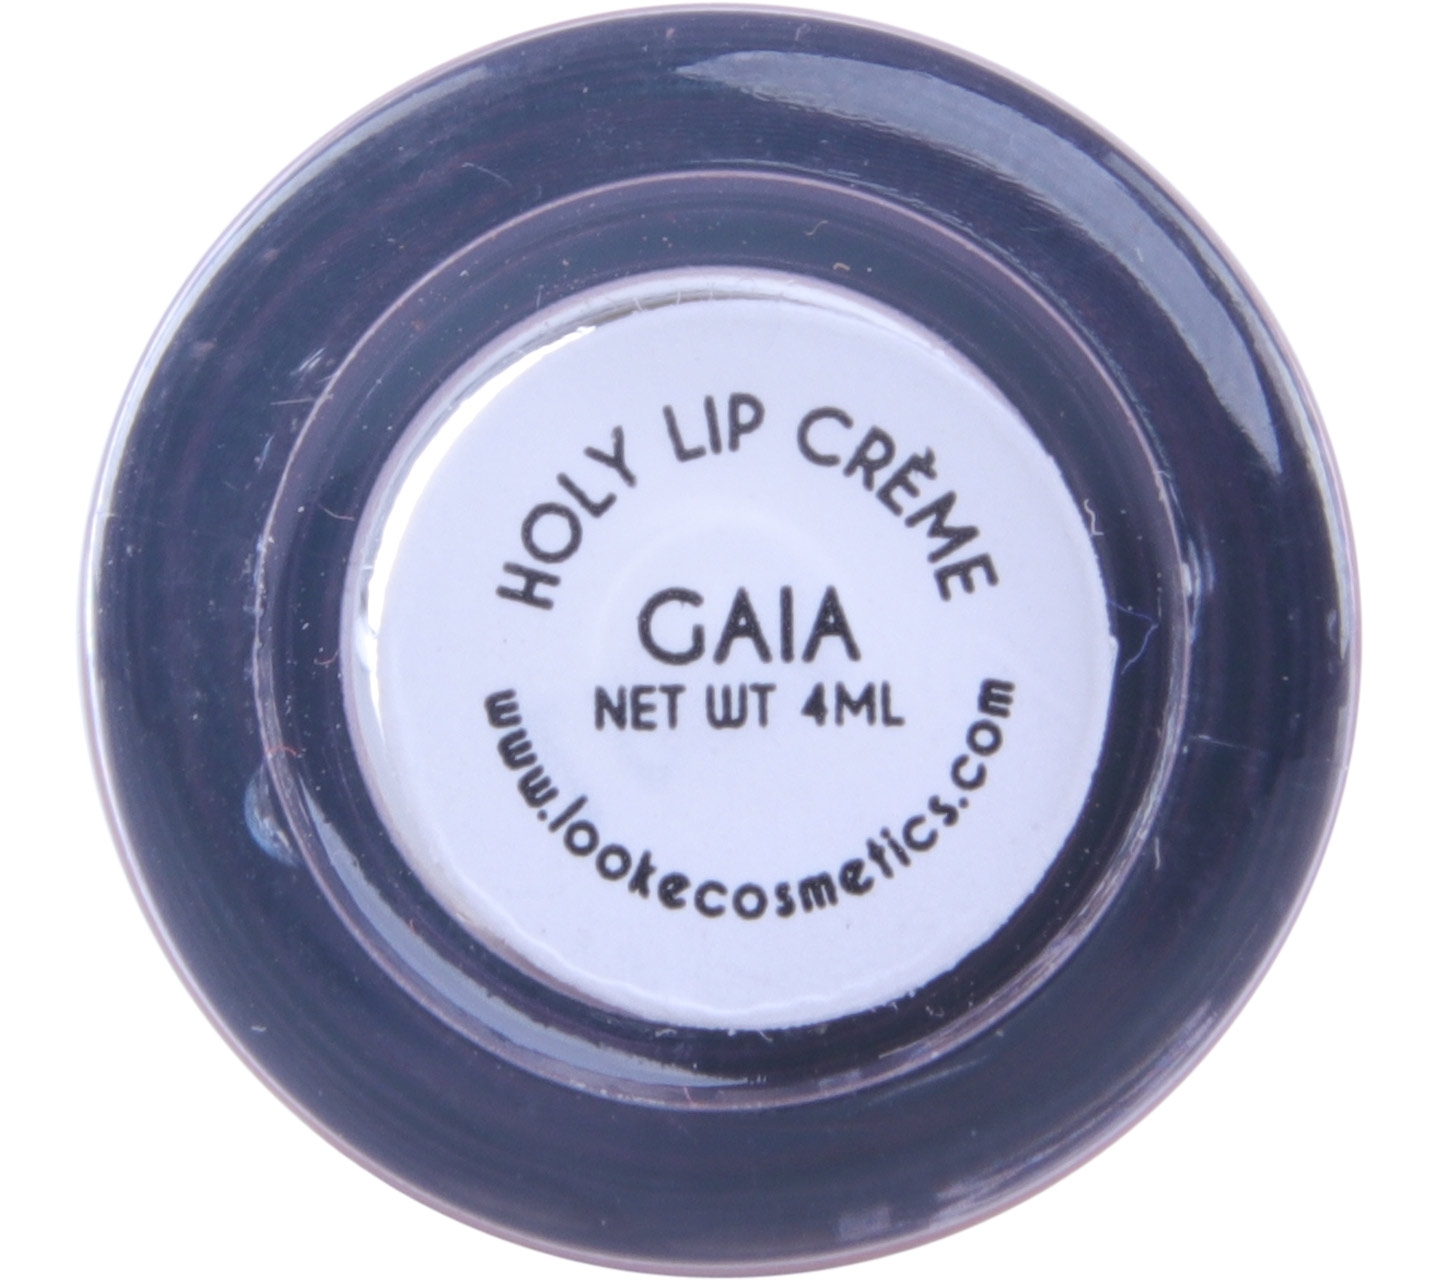 Looke Cosmetics Gaia Holy Lip Creme Lips